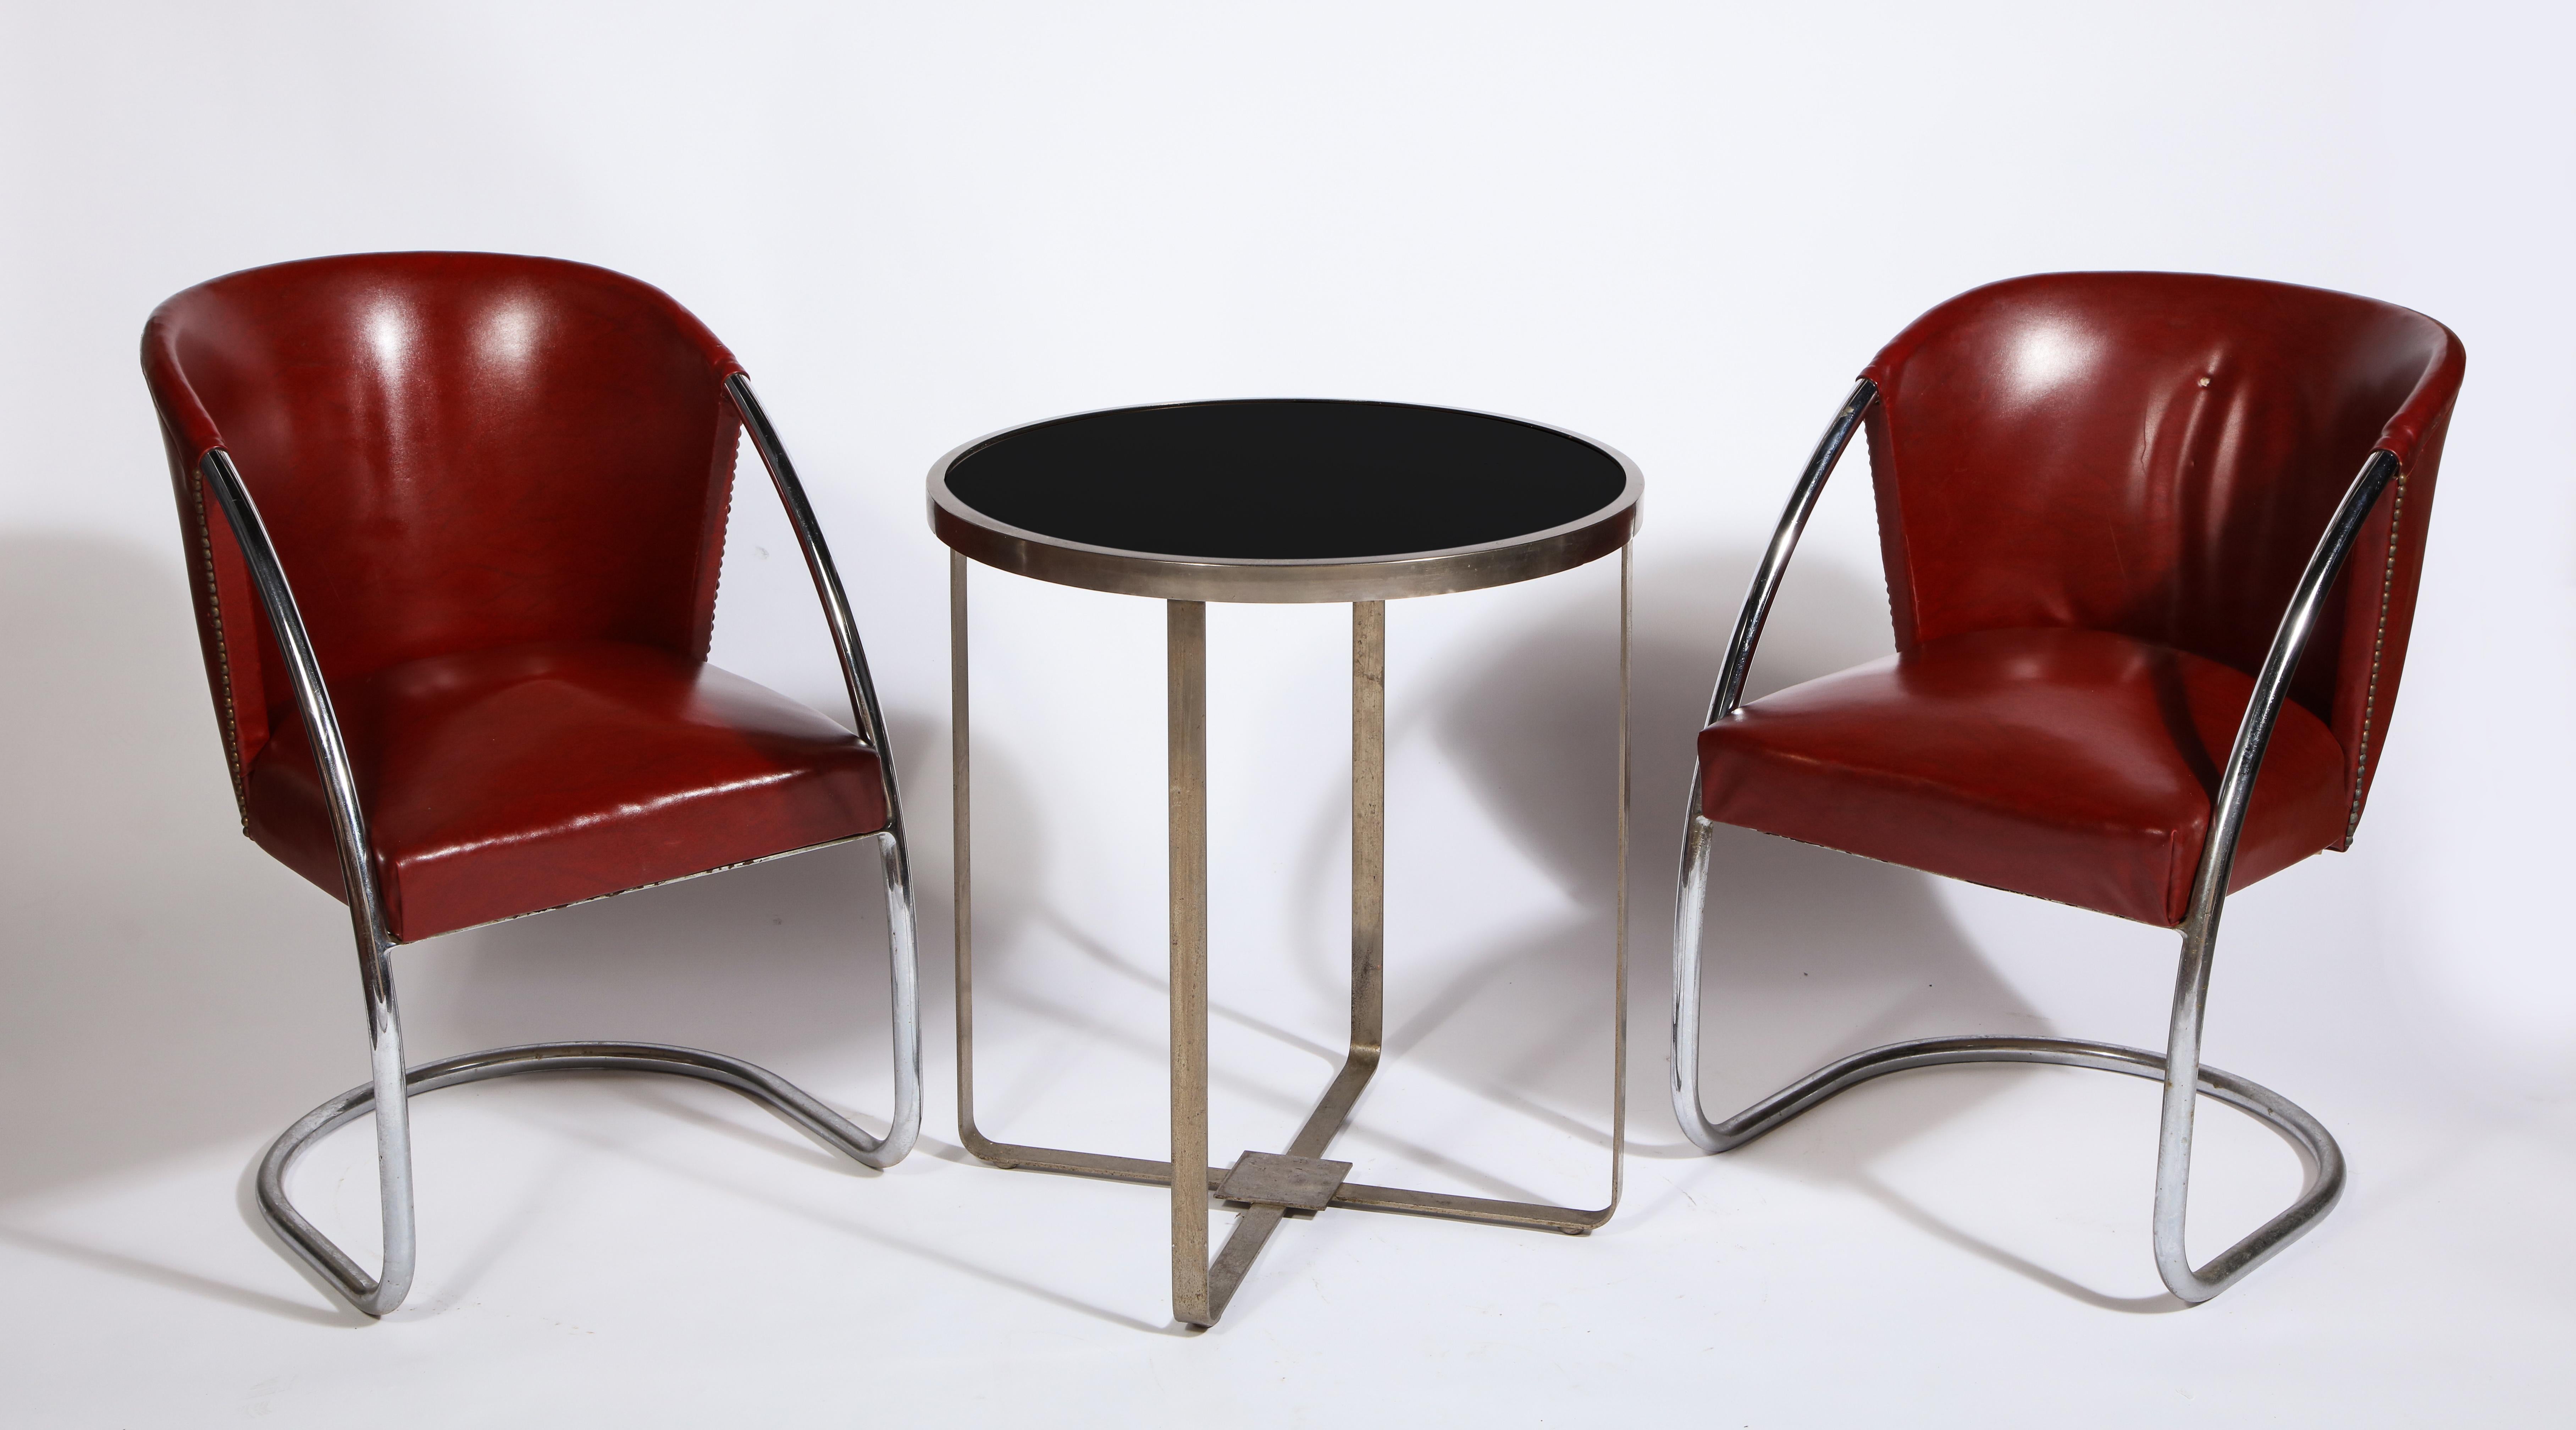 Modernist Art Deco Adnet Attr. Steel Round Black Glass Table, France, 1930s For Sale 3